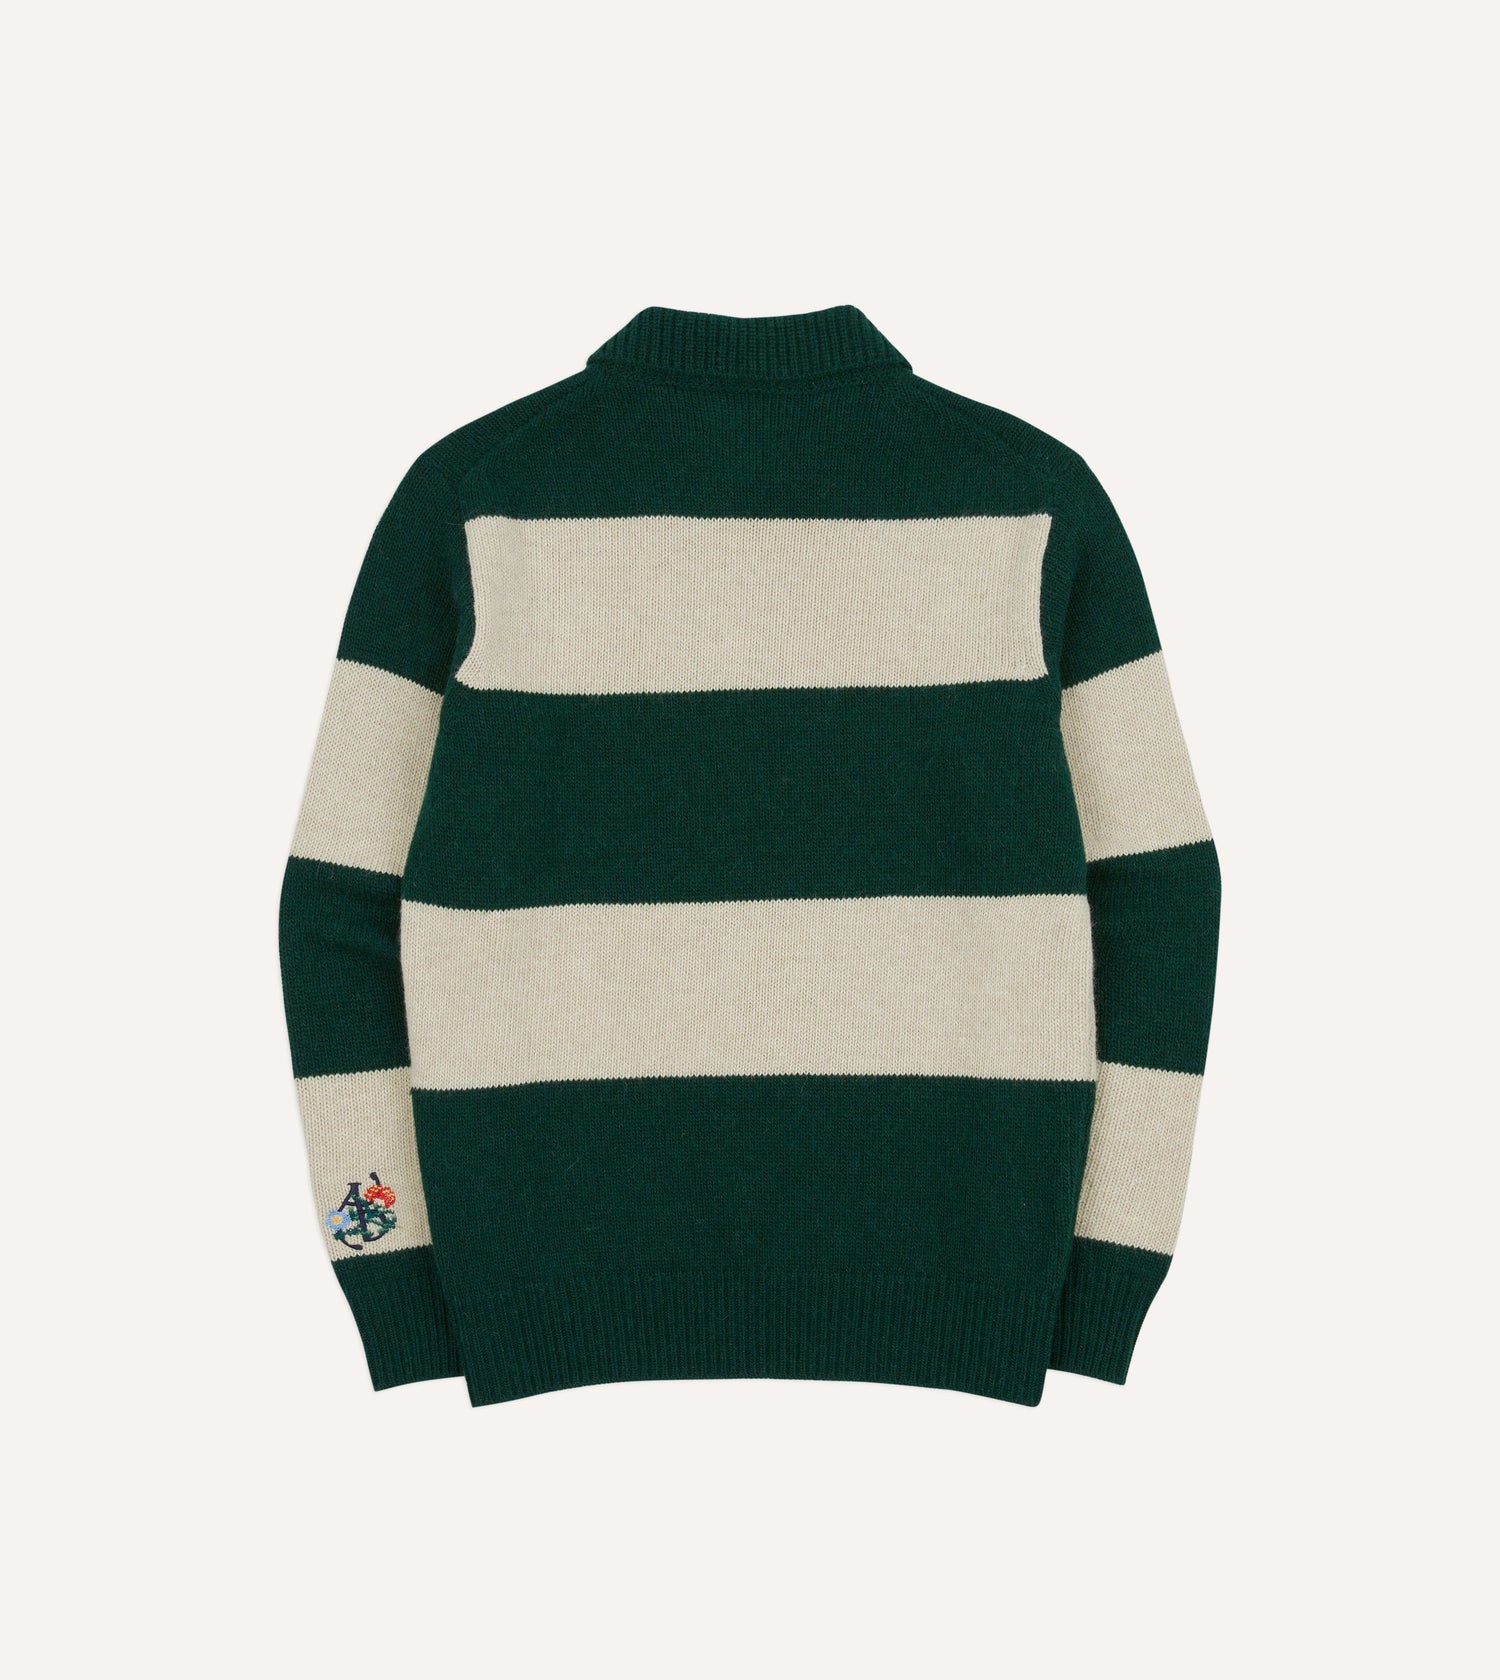 ALD / Drake's Green Striped Integral Collar Sweater